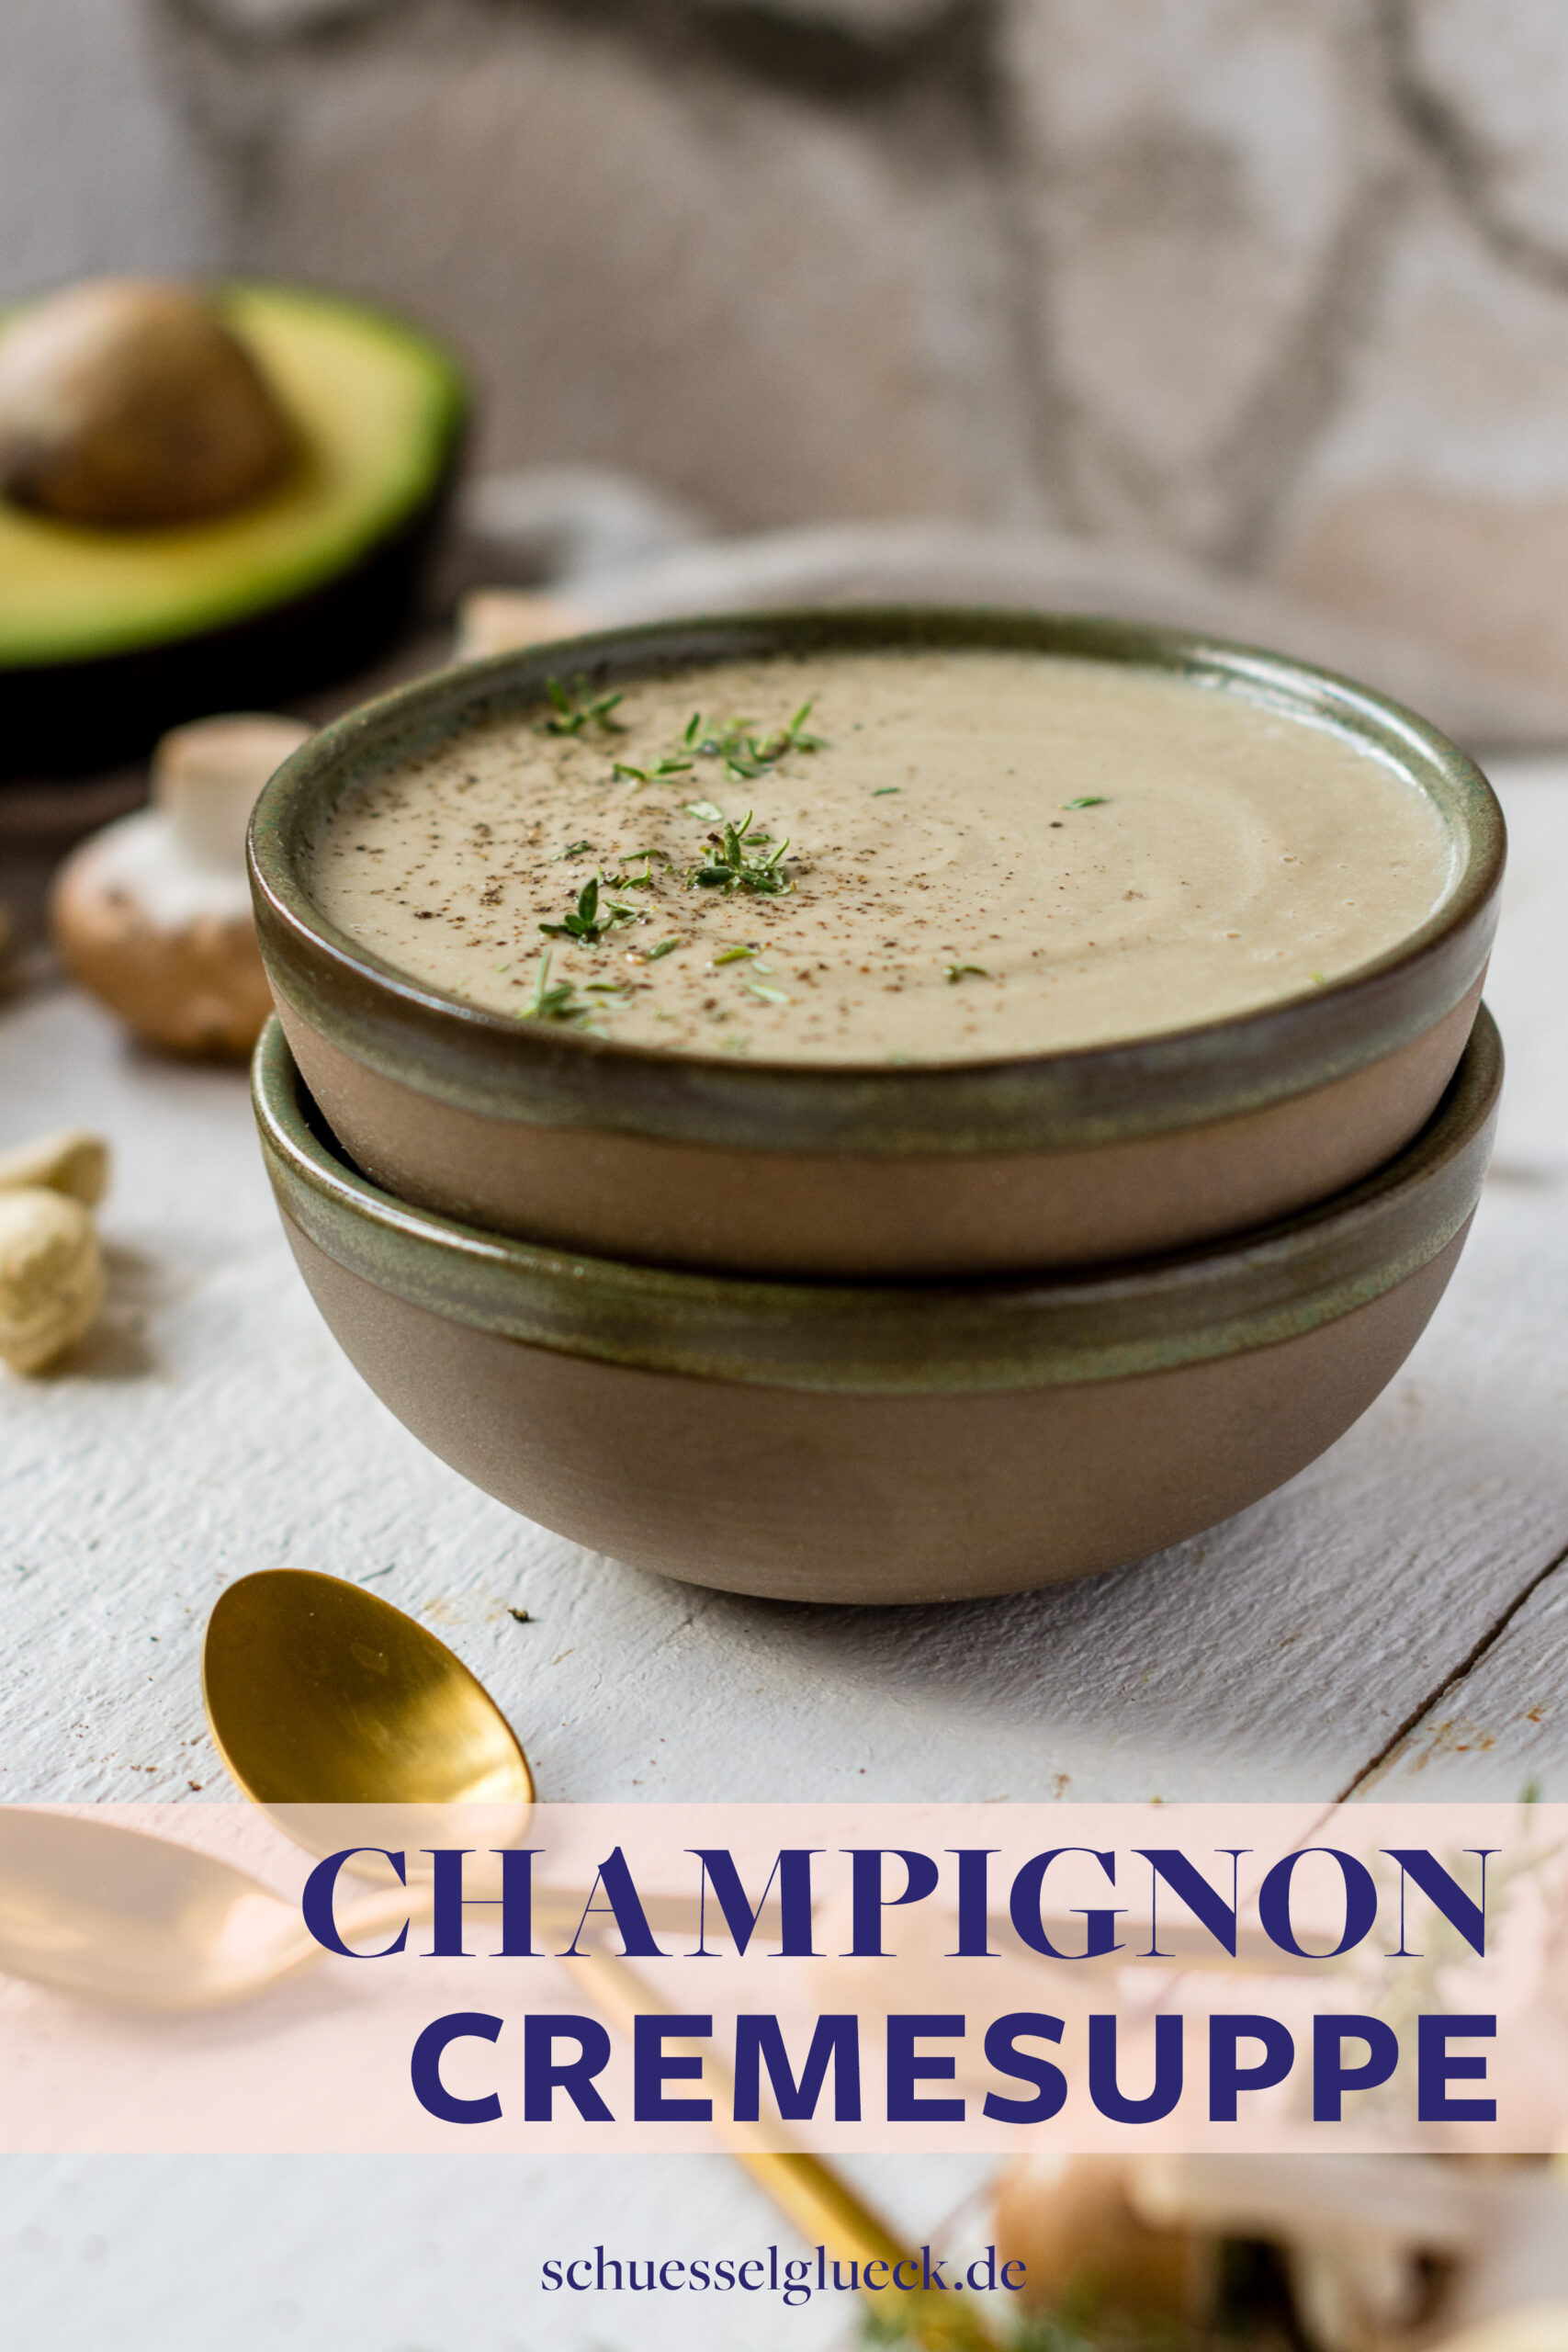 Vegane Champignon Cremesuppe ohne kochen – fertig in 5 Minuten!